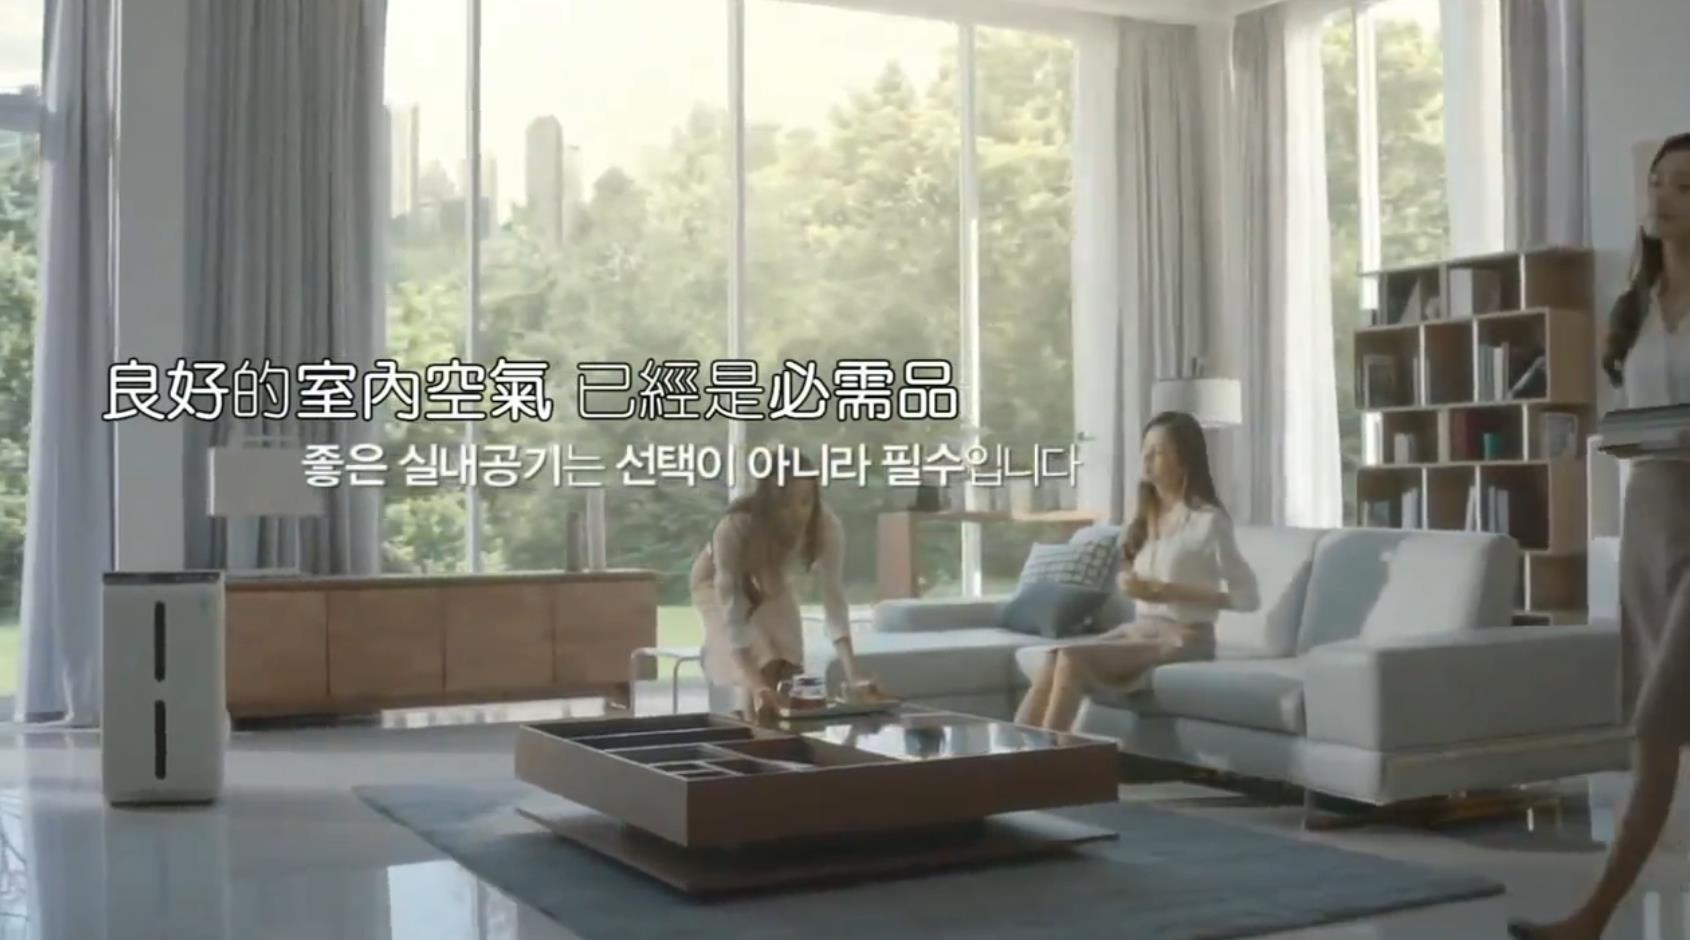 Amway new韩版 空气淨化机广告